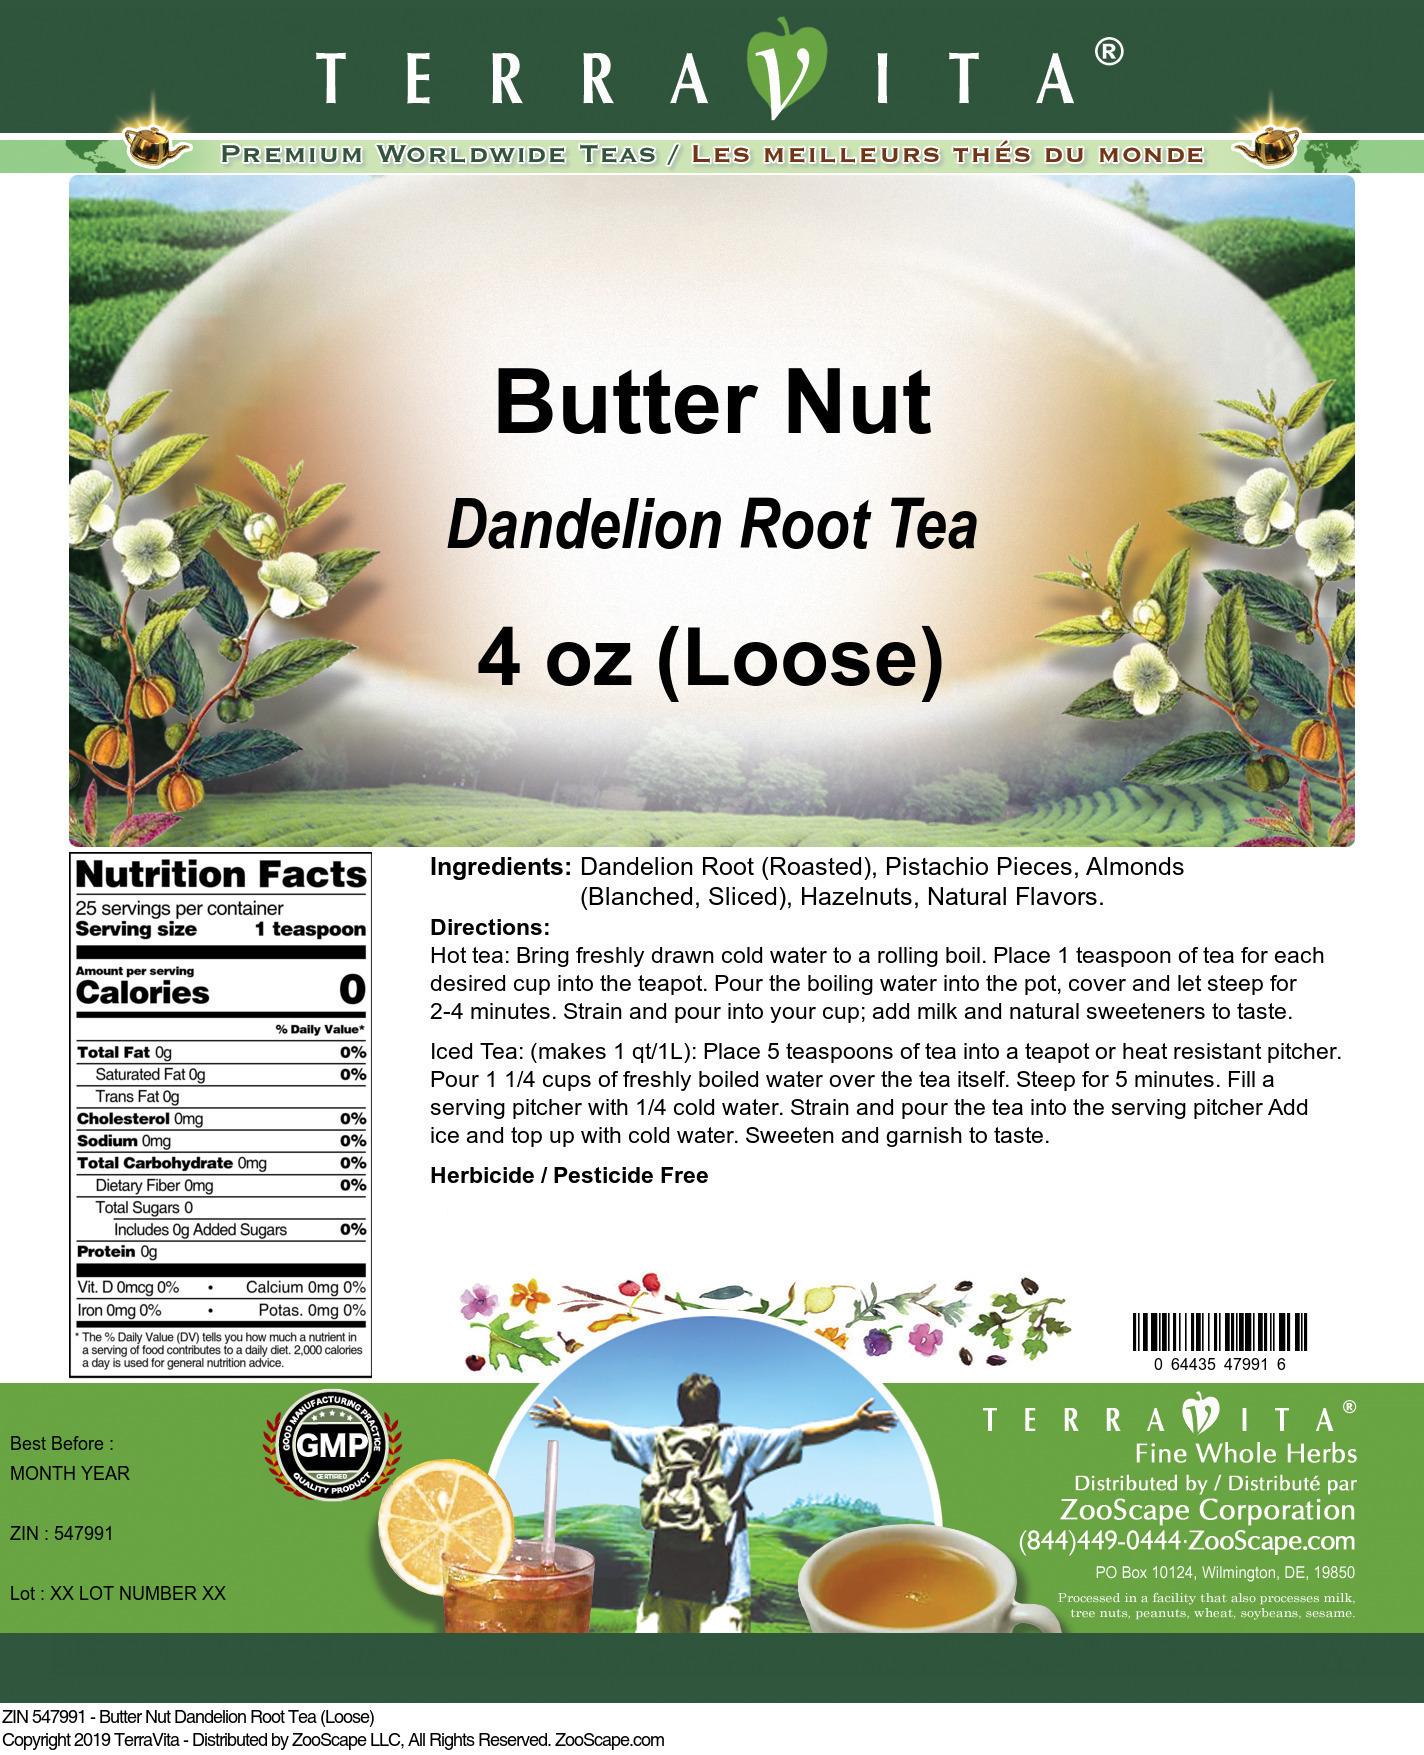 Butter Nut Dandelion Root Tea (Loose) - Label